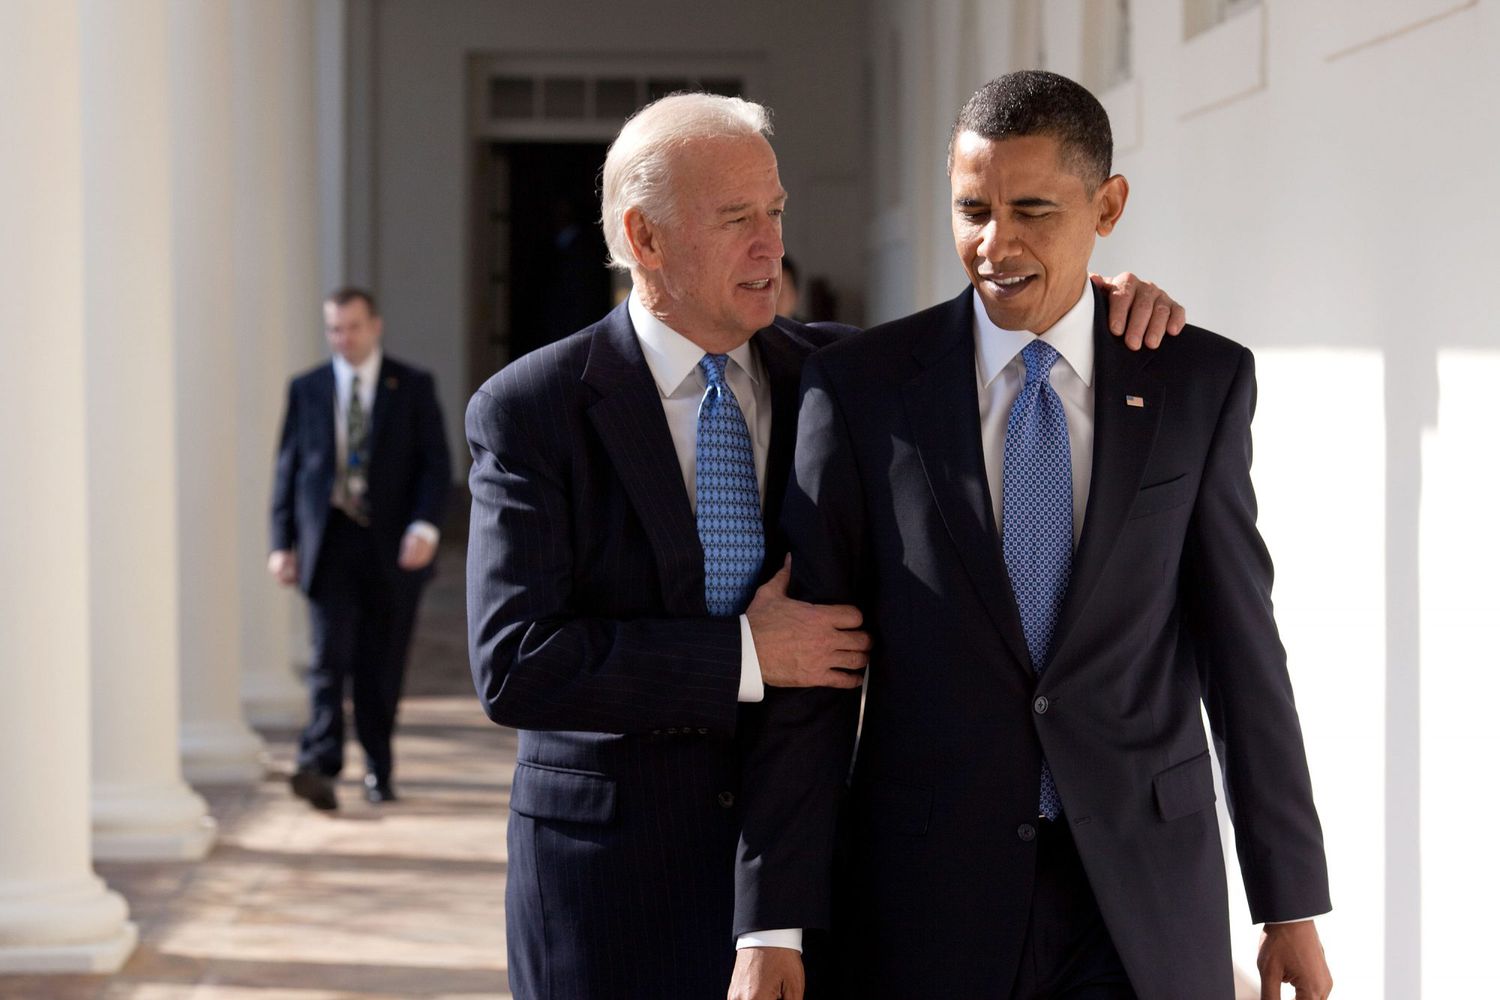 Barack Obama walks with Vice President Joe Biden